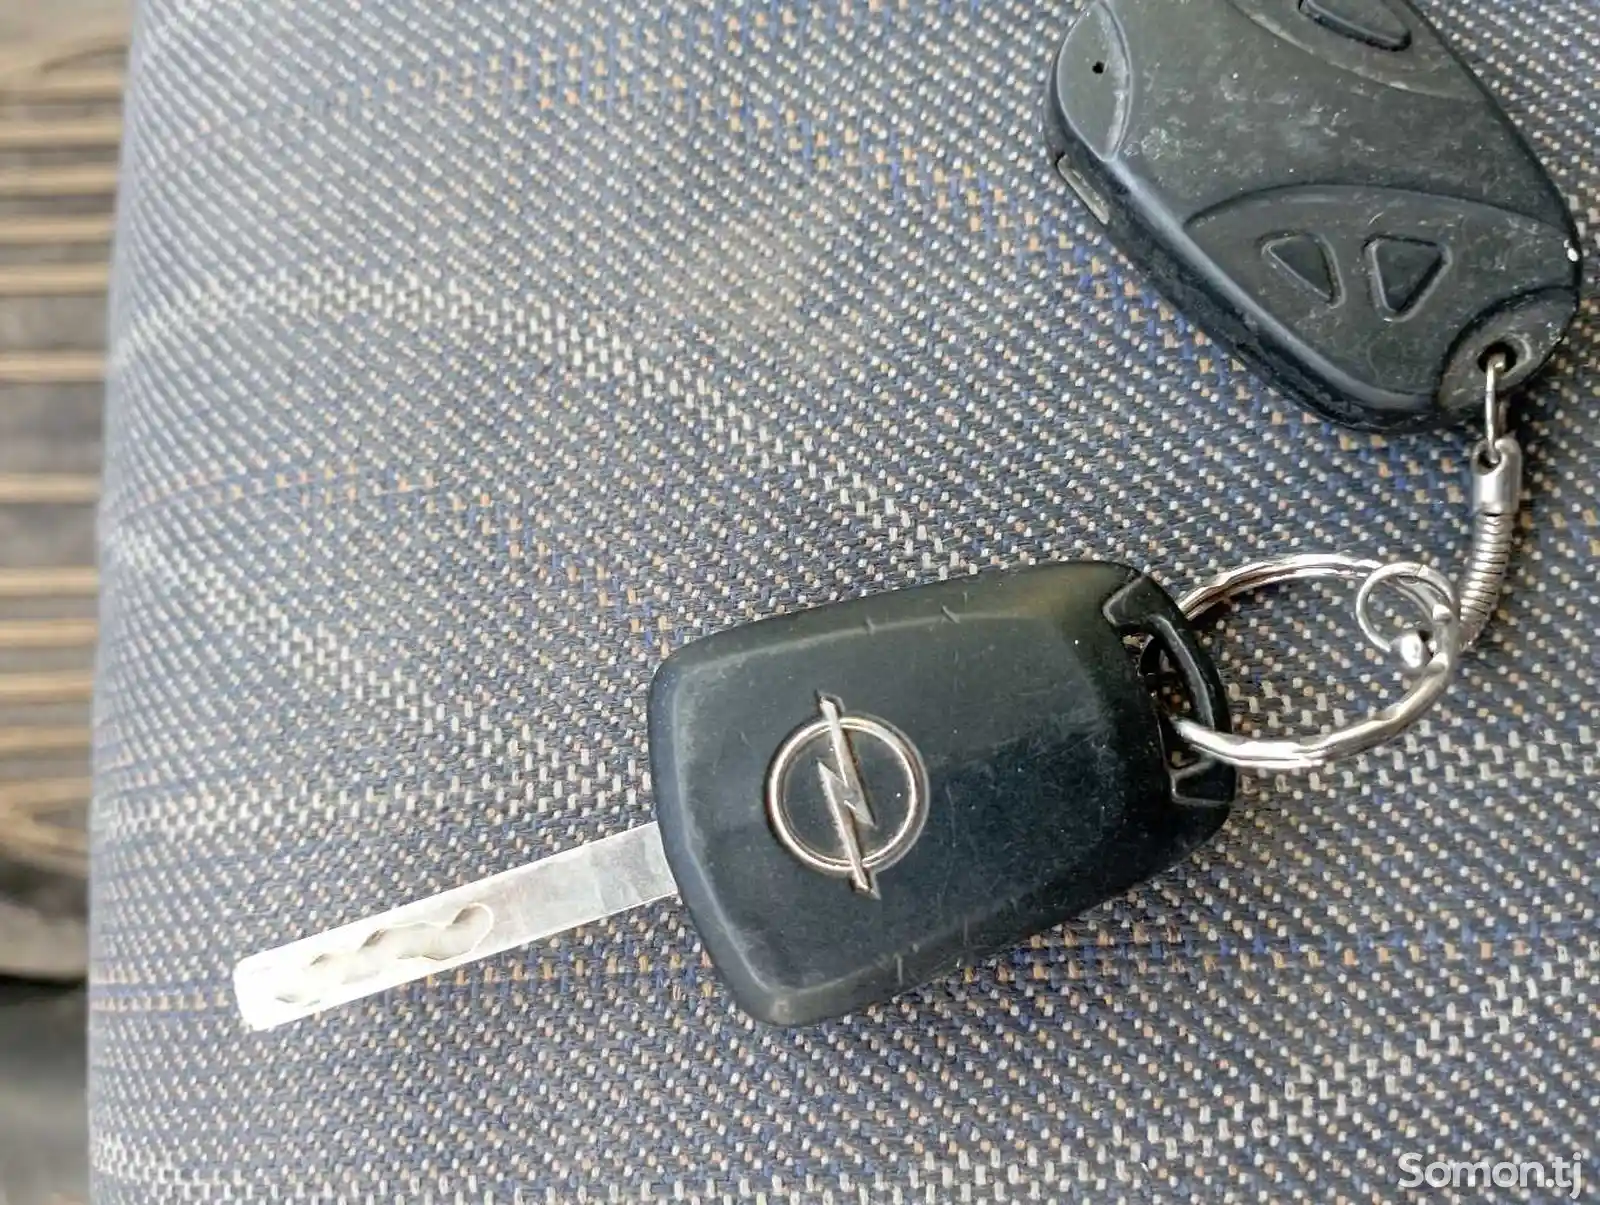 Ключи от Opel-1